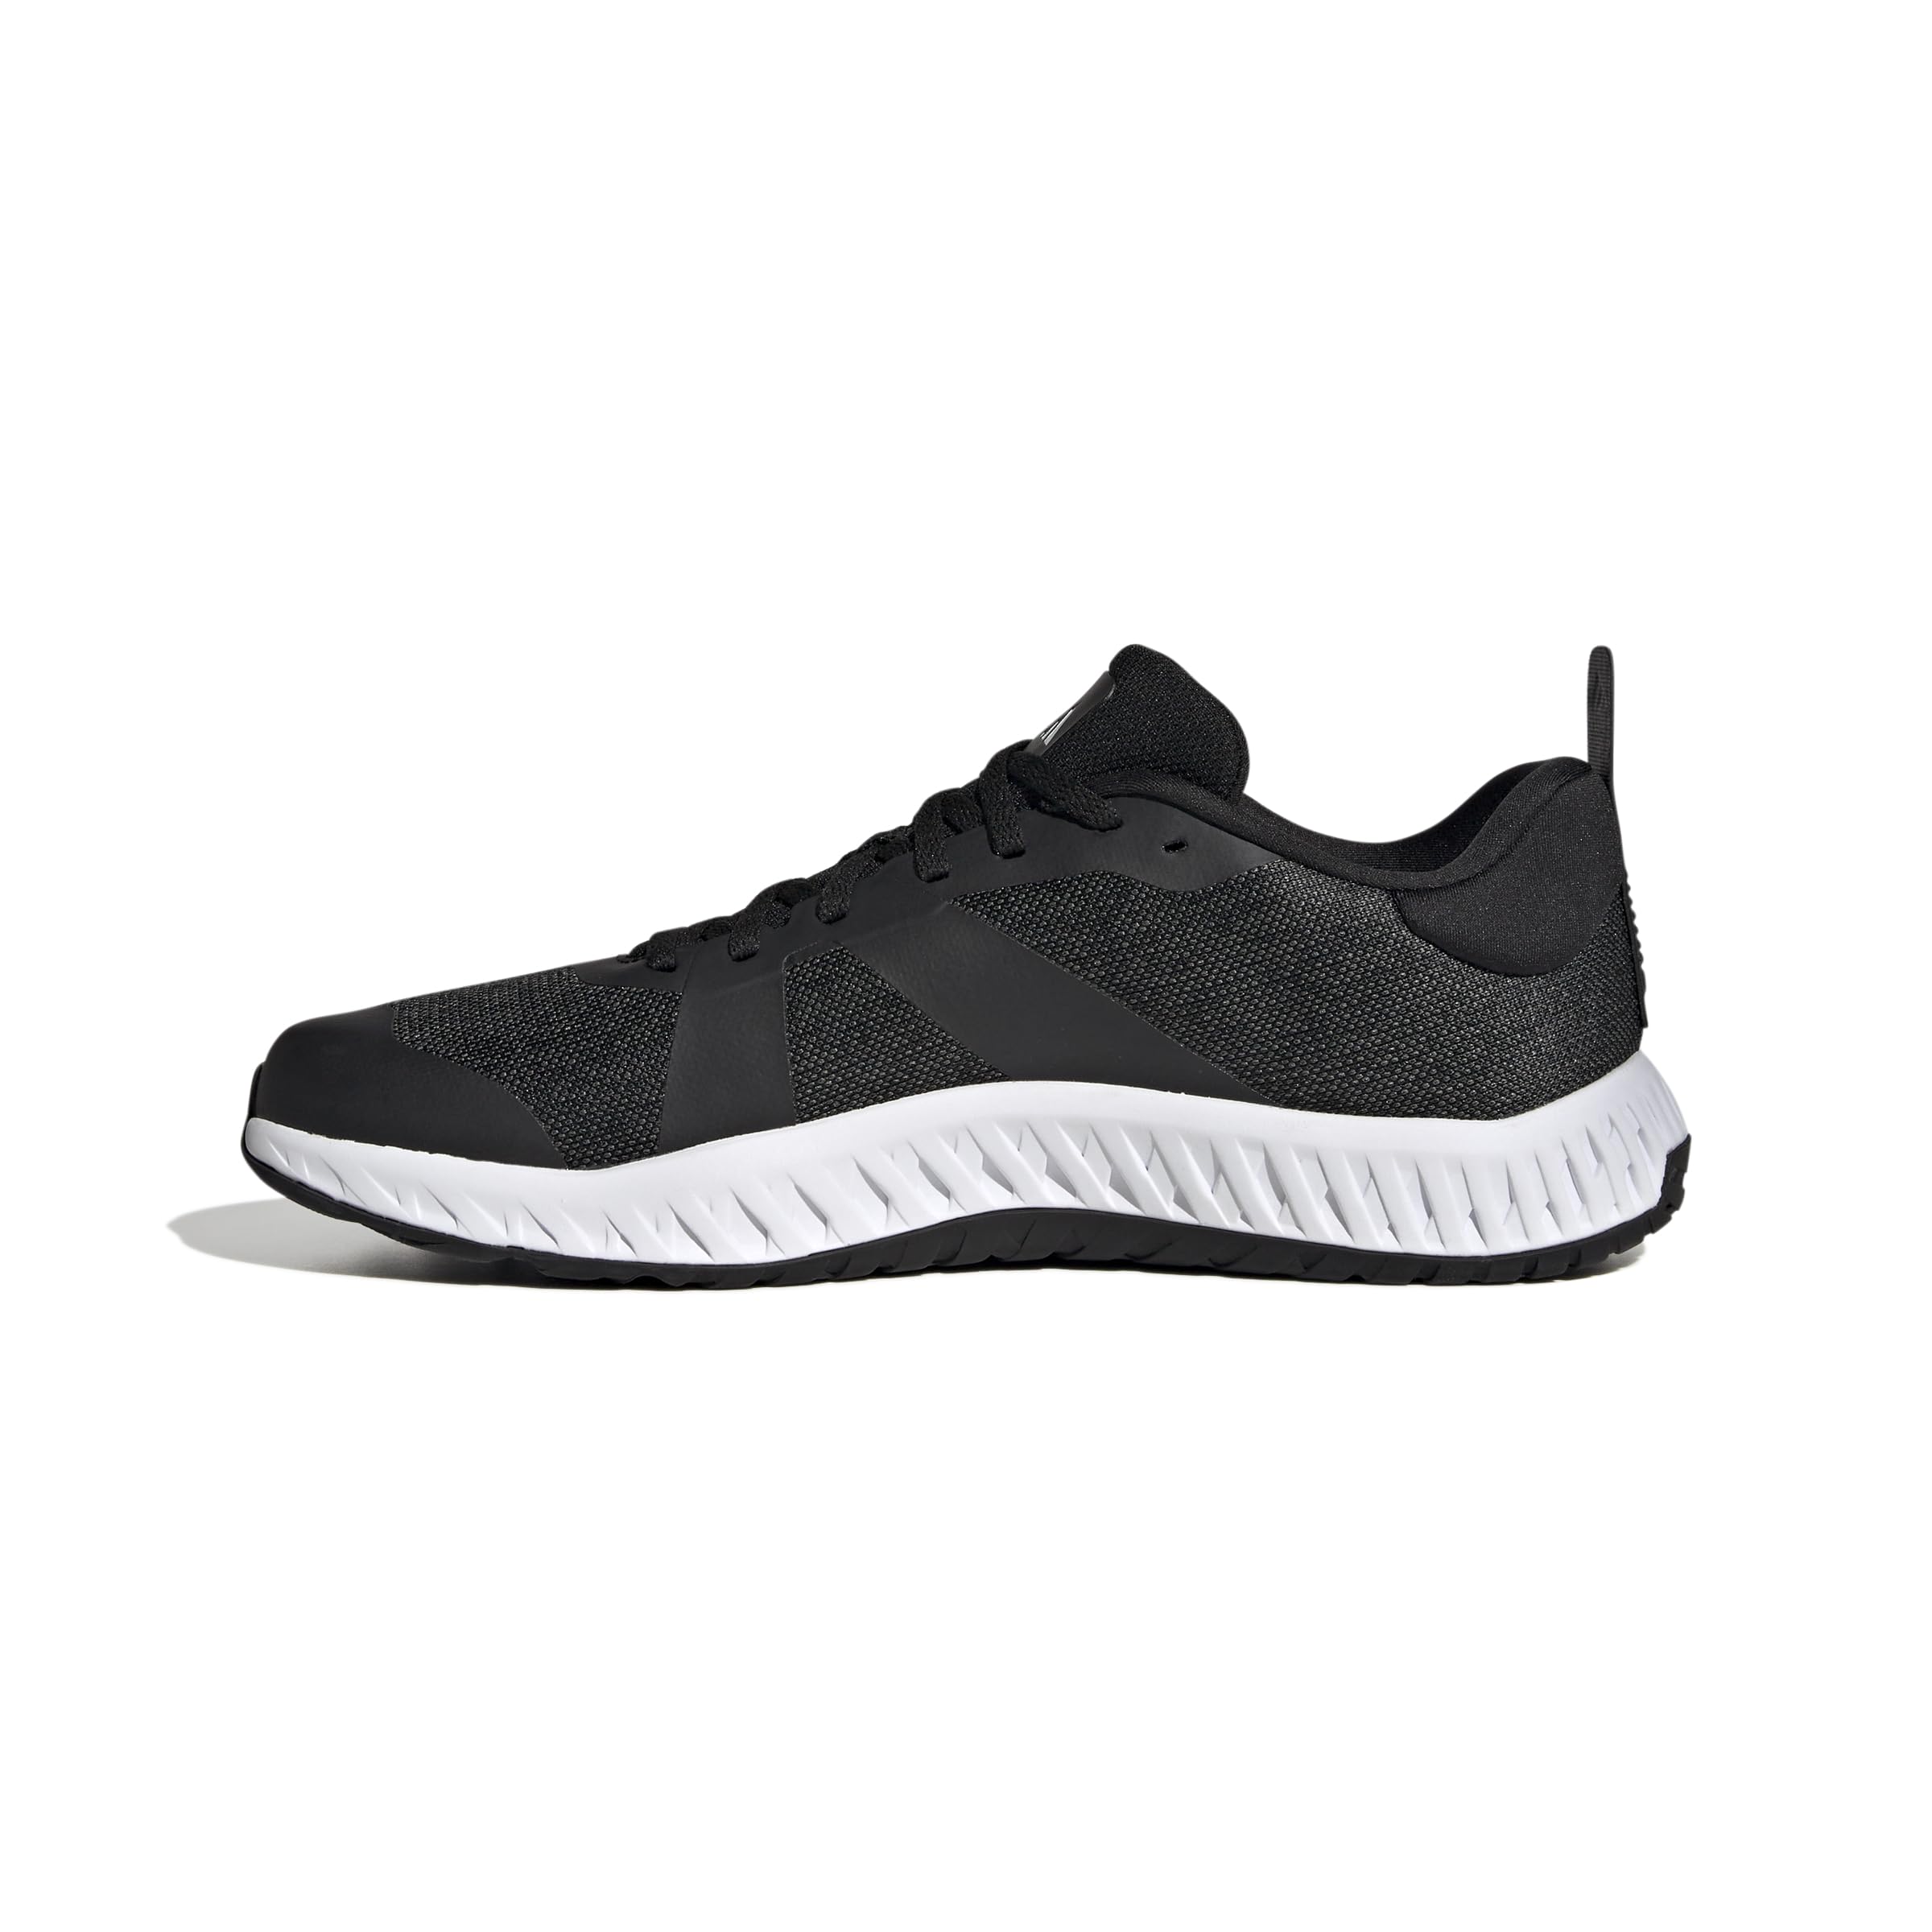 Adidas Unisex Everyset Trainer Shoes-Low (Non Football), Core Black/FTWR White/FTWR White, 41 1/3 EU